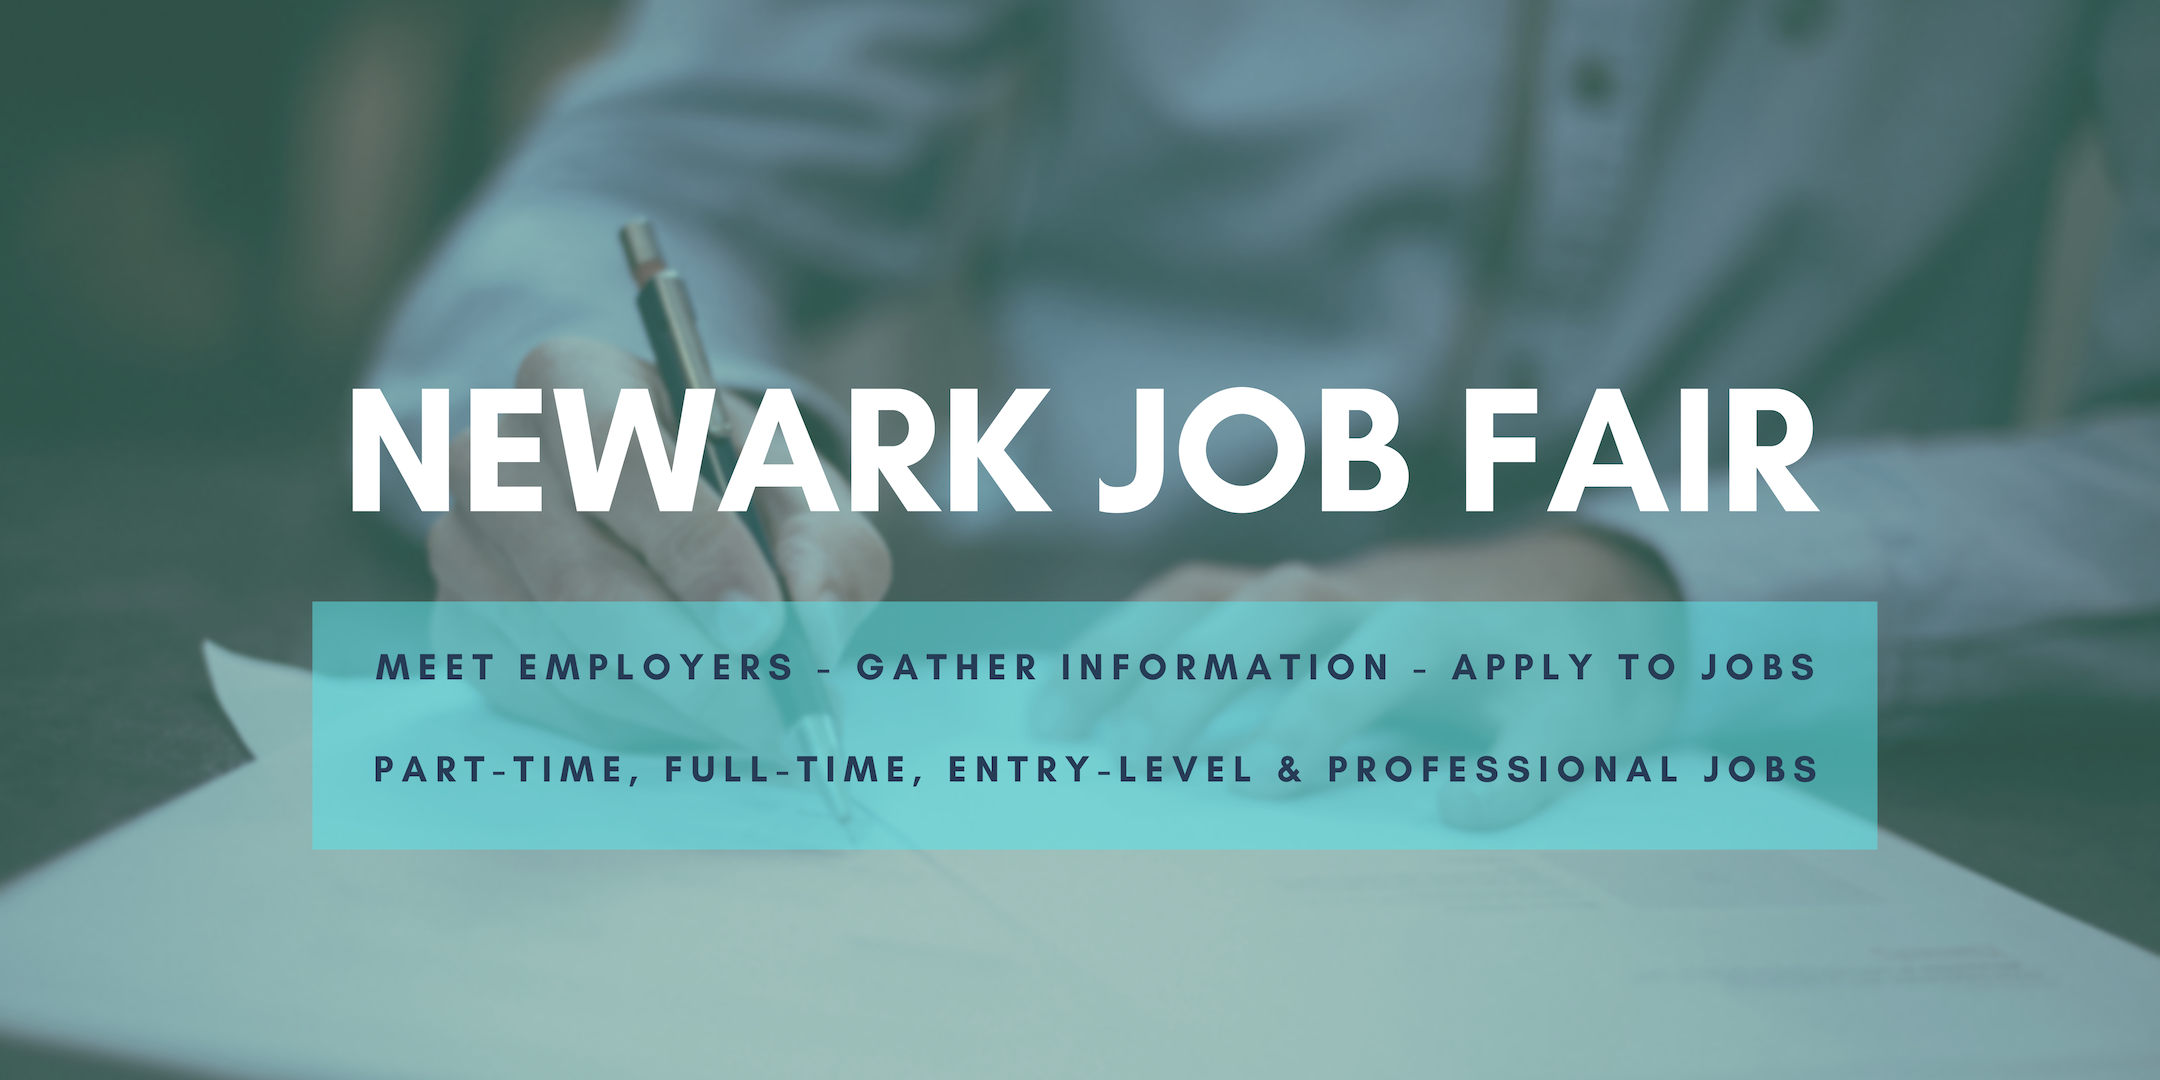 Newark Job Fair - July 13, 2020 - Career Fair